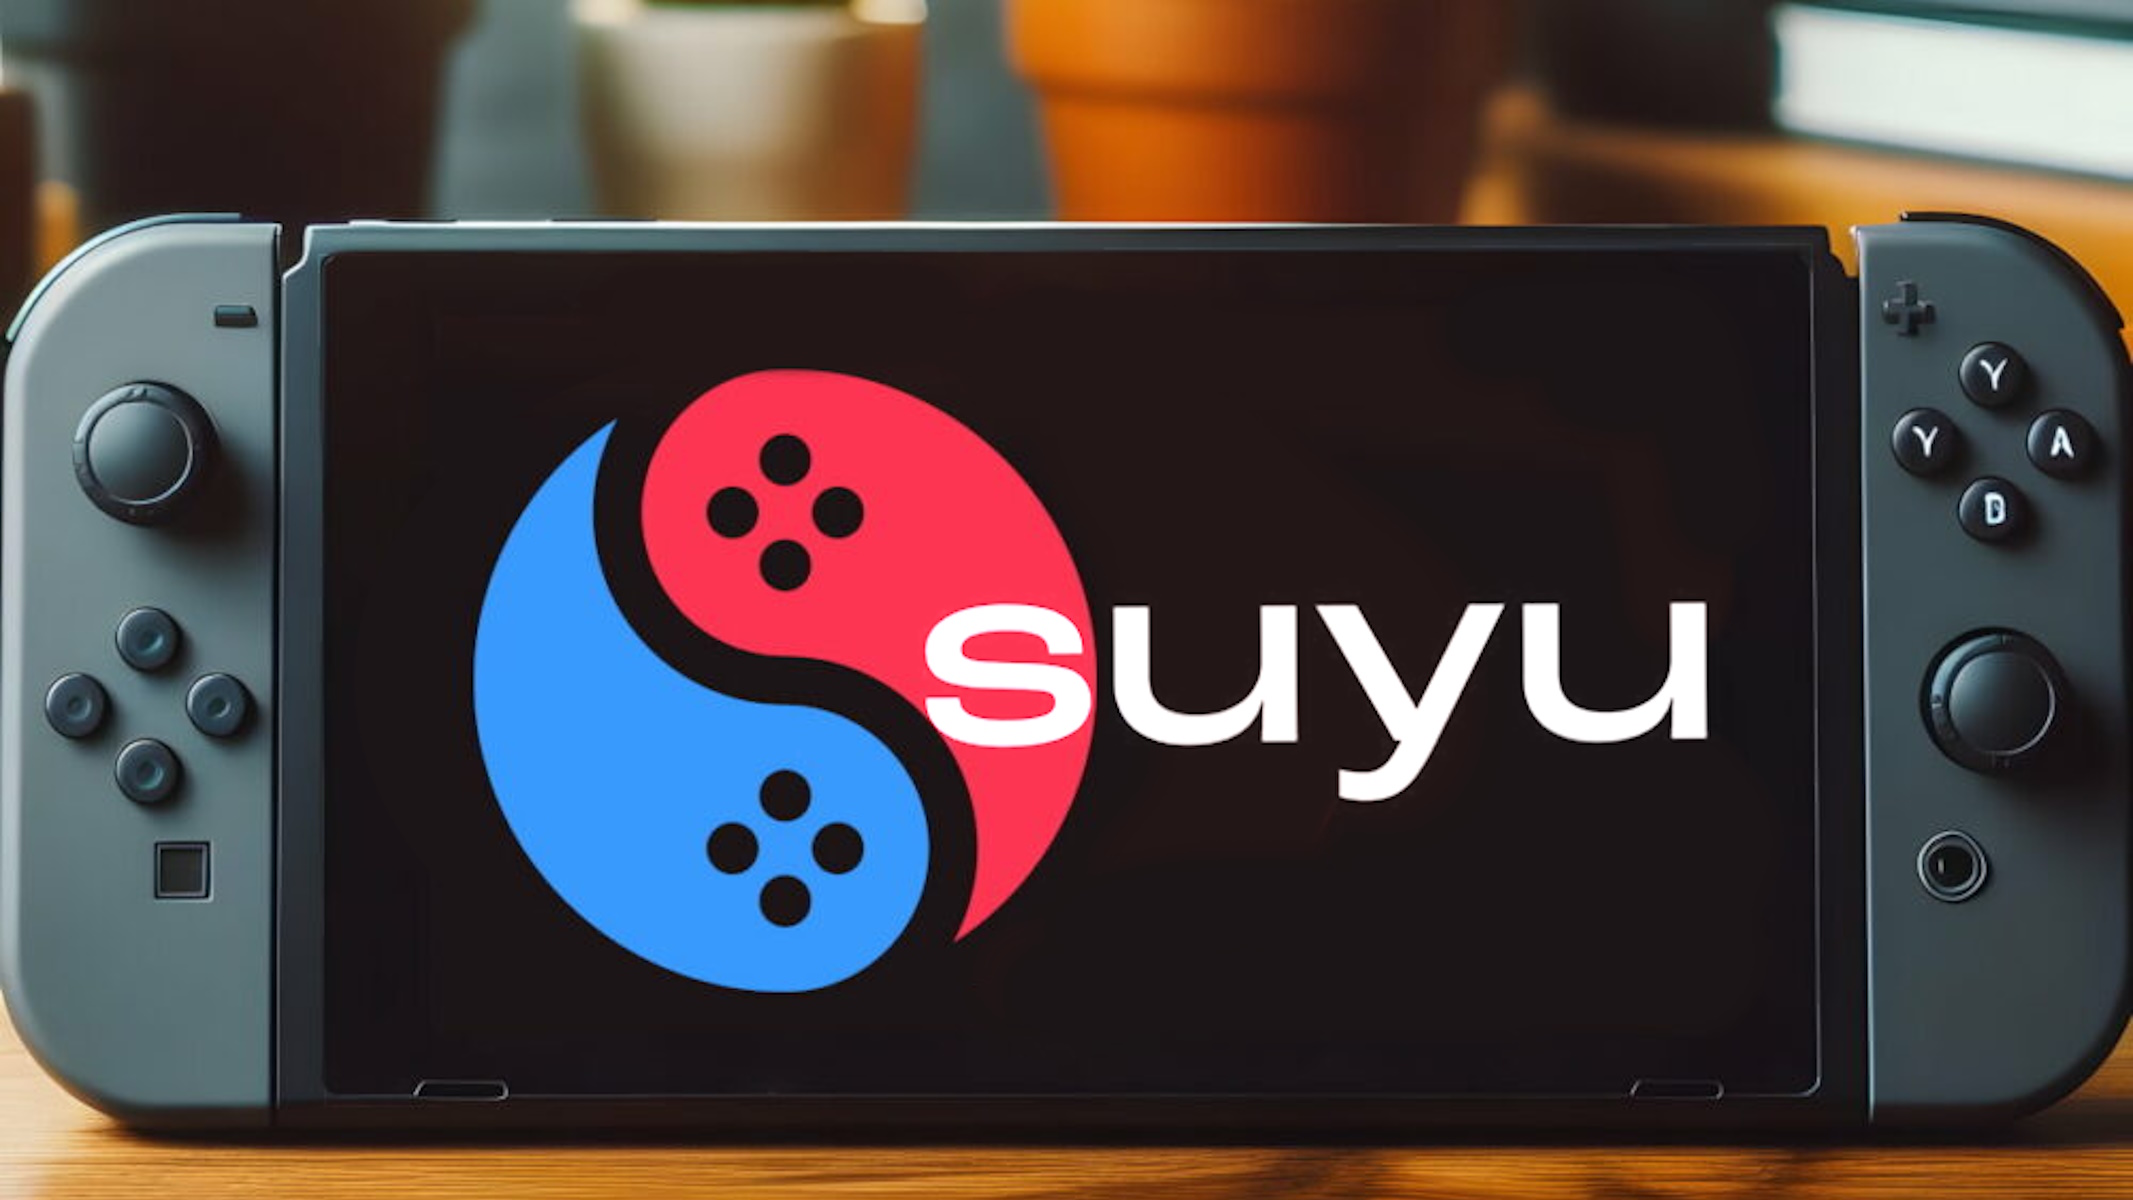 Emulatore Nintendo Switch Suyu